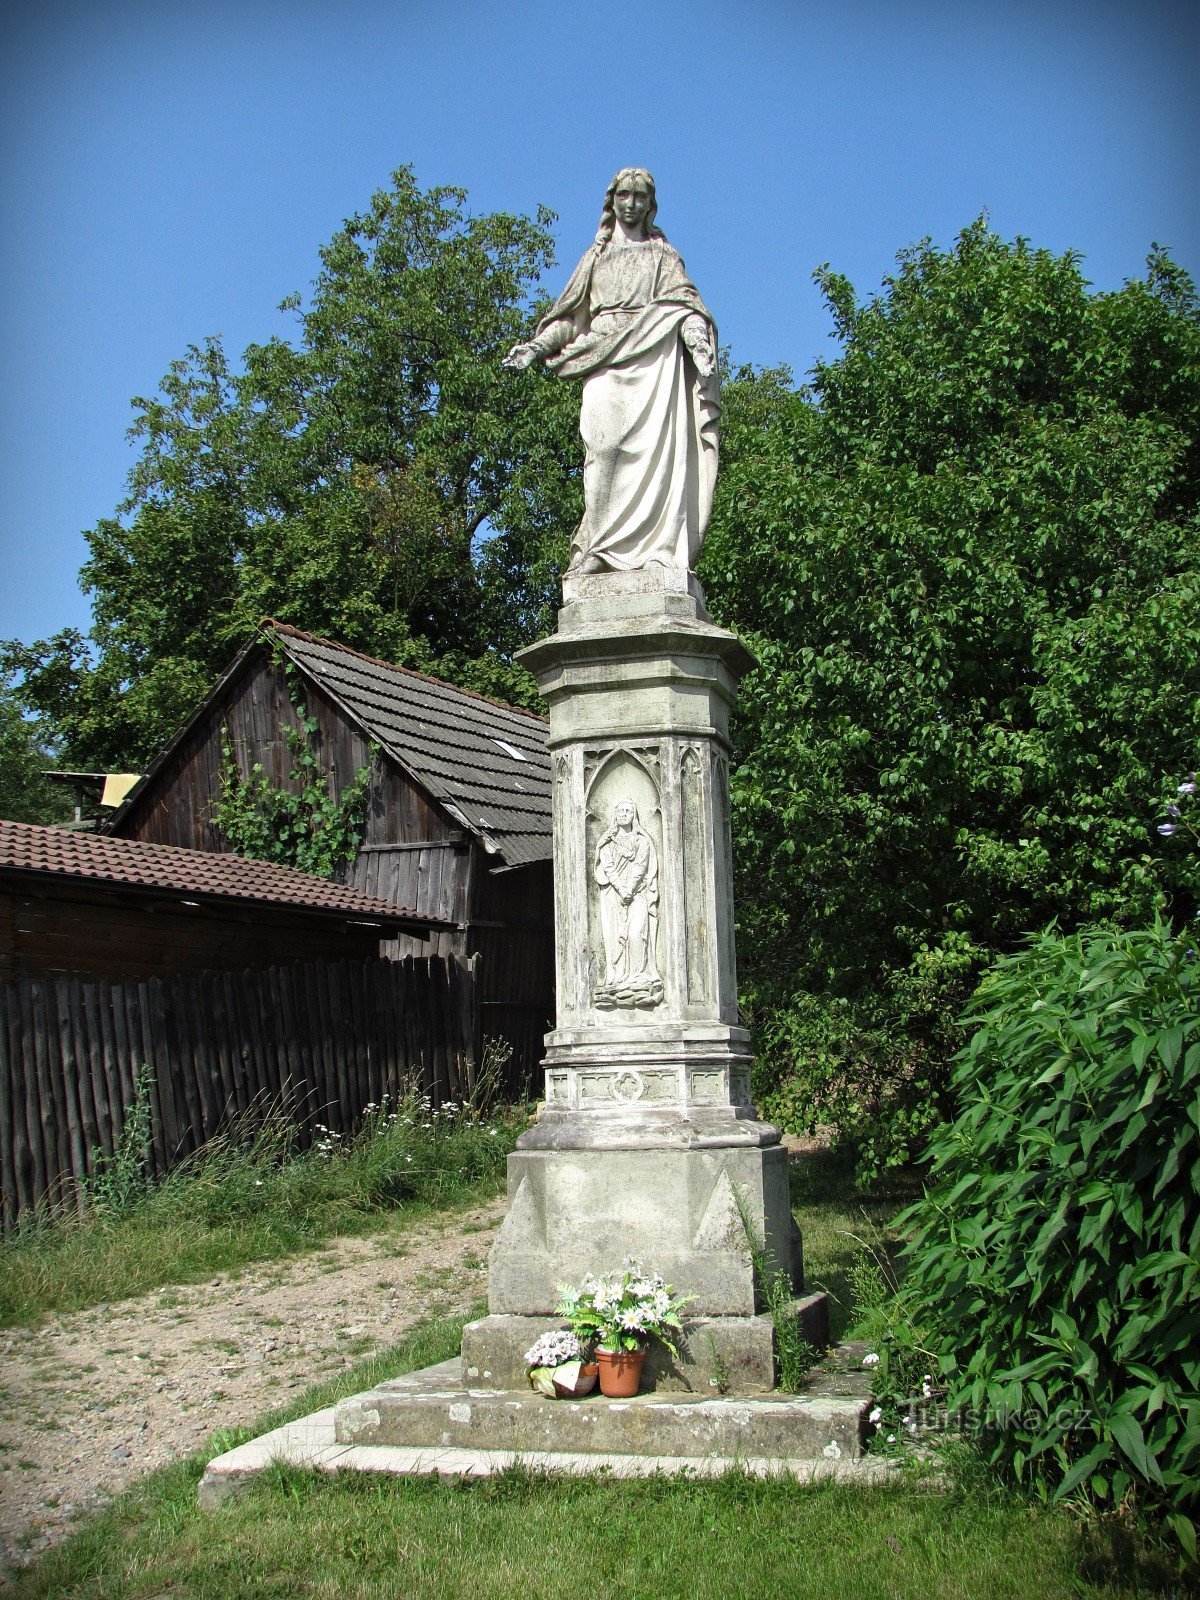 Hostišová - autres monuments du village